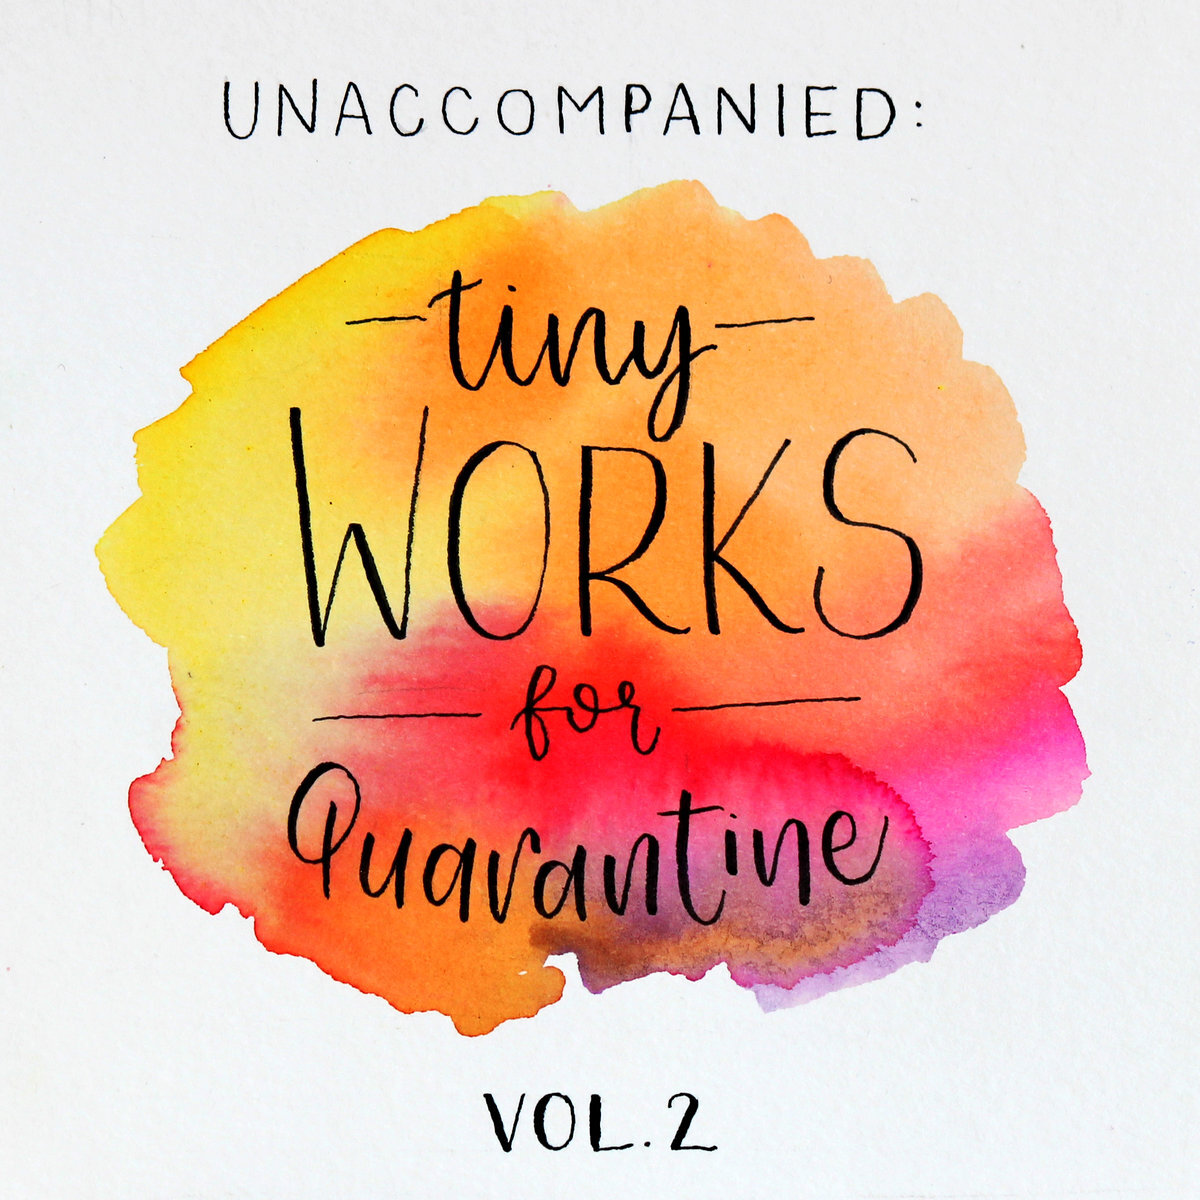 Tiny works for Quarantine vol. 2 - CD album cover.jpg